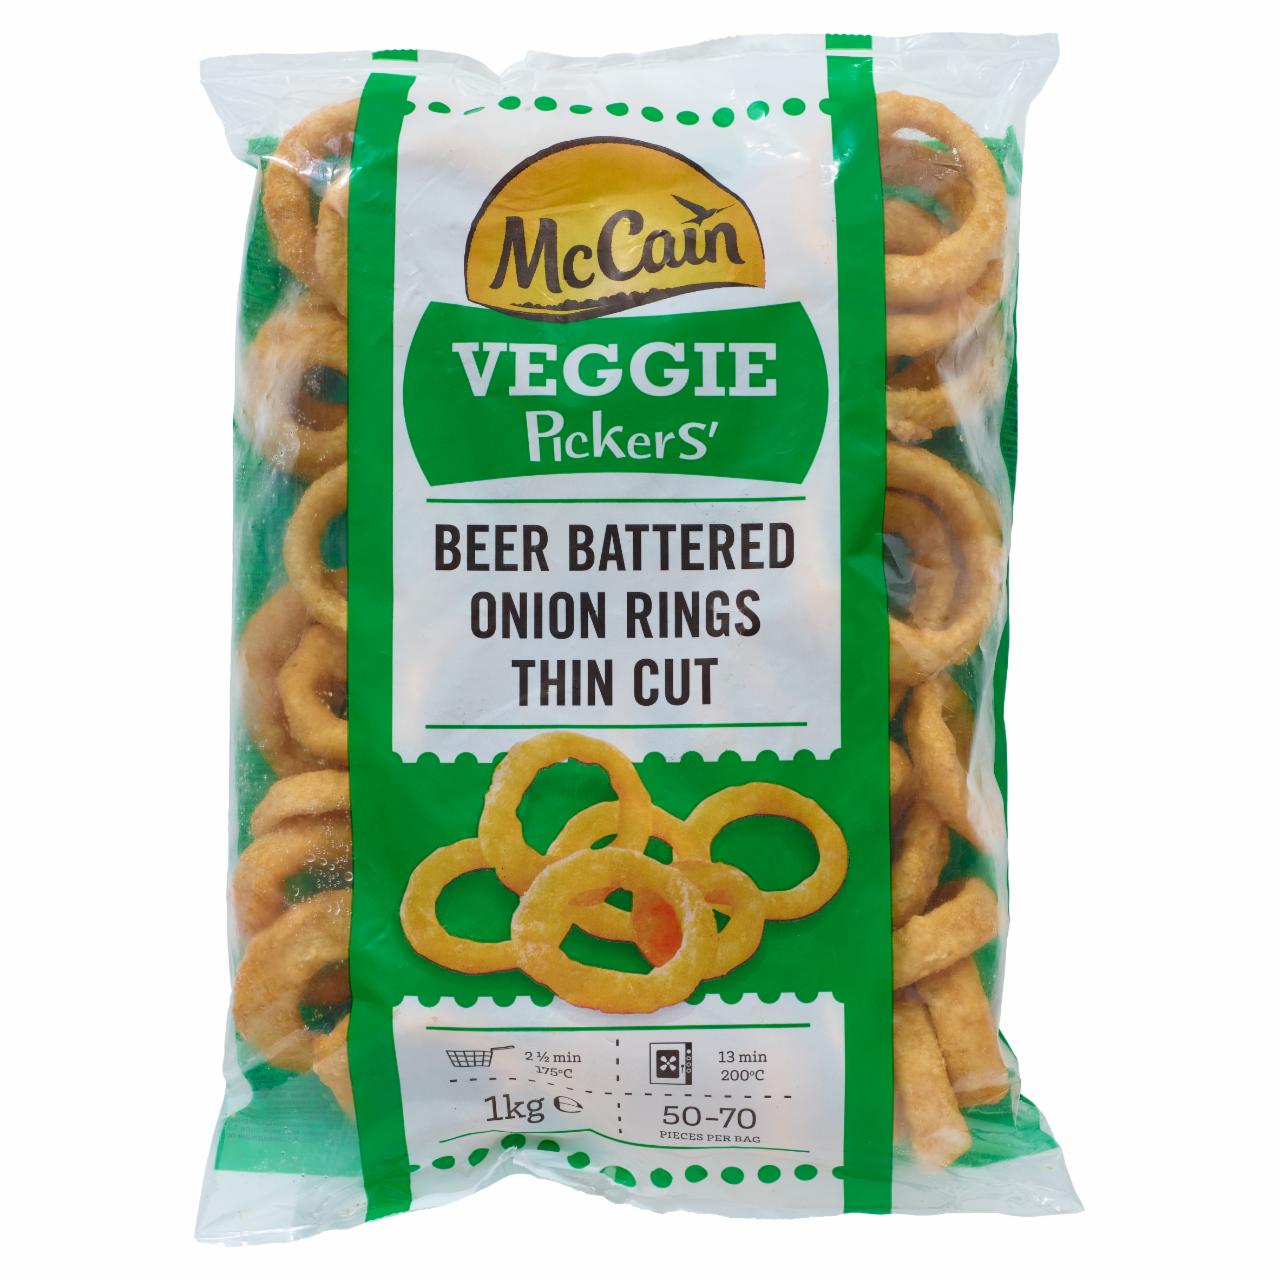 Photo - McCain Veggie Pickers' Beer Battered Onion Rings Thin Cut 1 kg